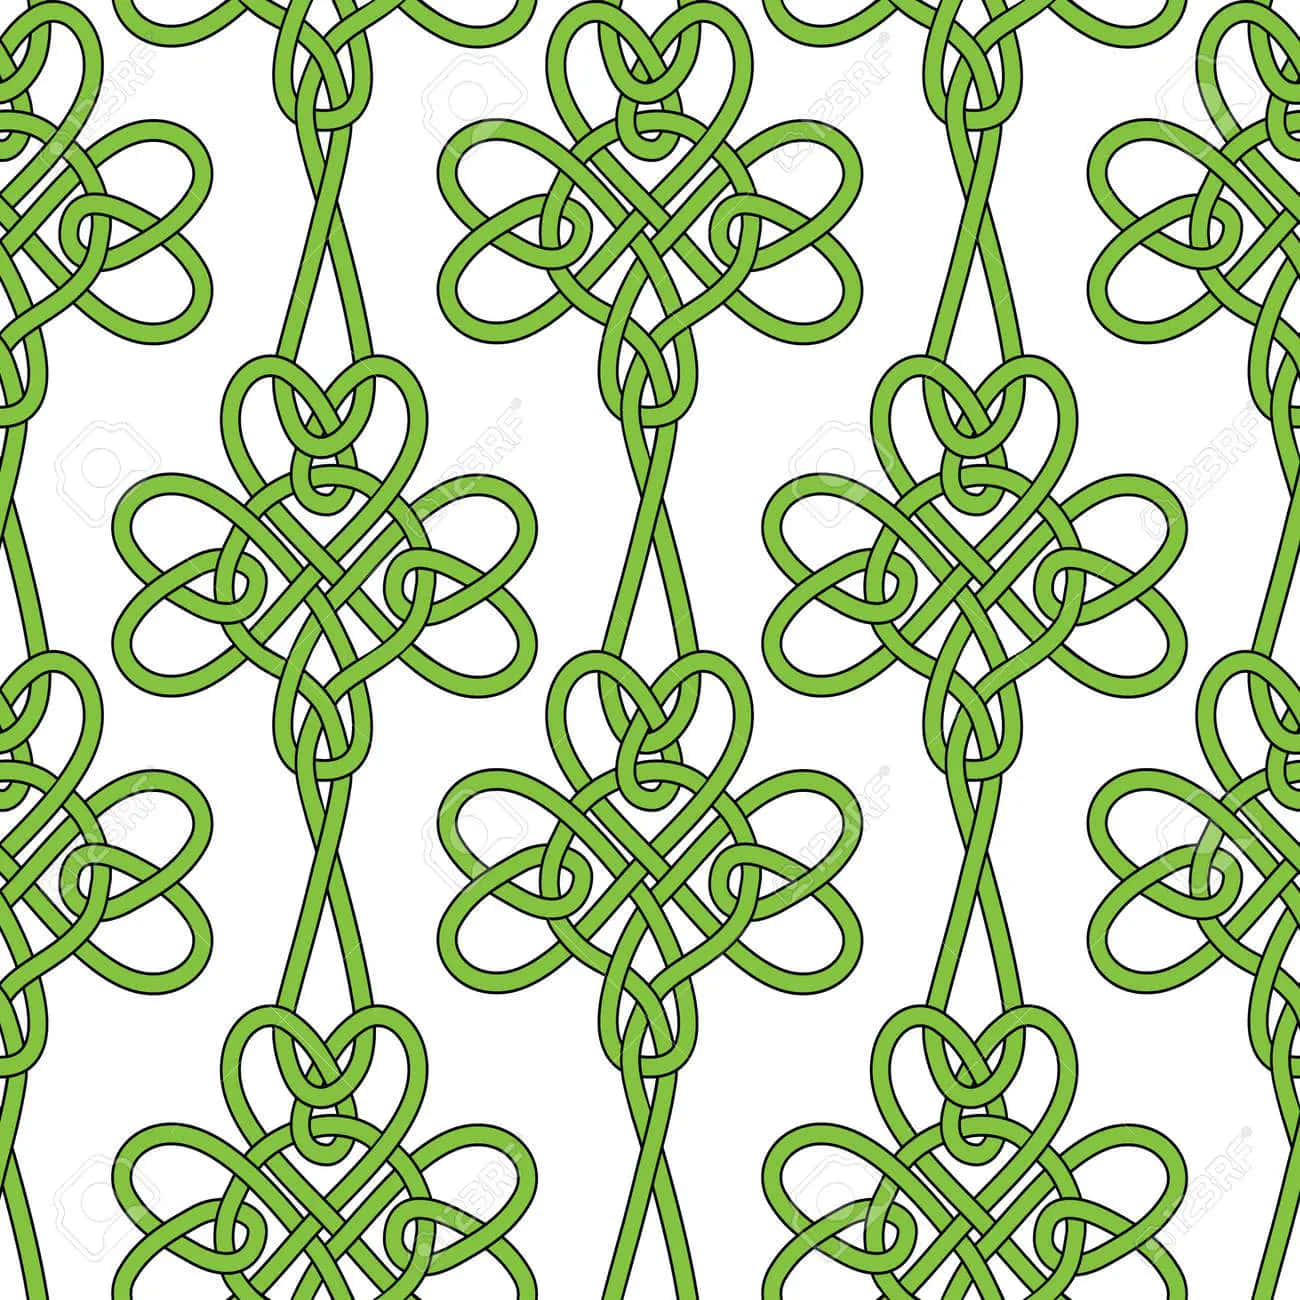 Yarns Weaved Into Celtic Irish Cloverleaves Wallpaper